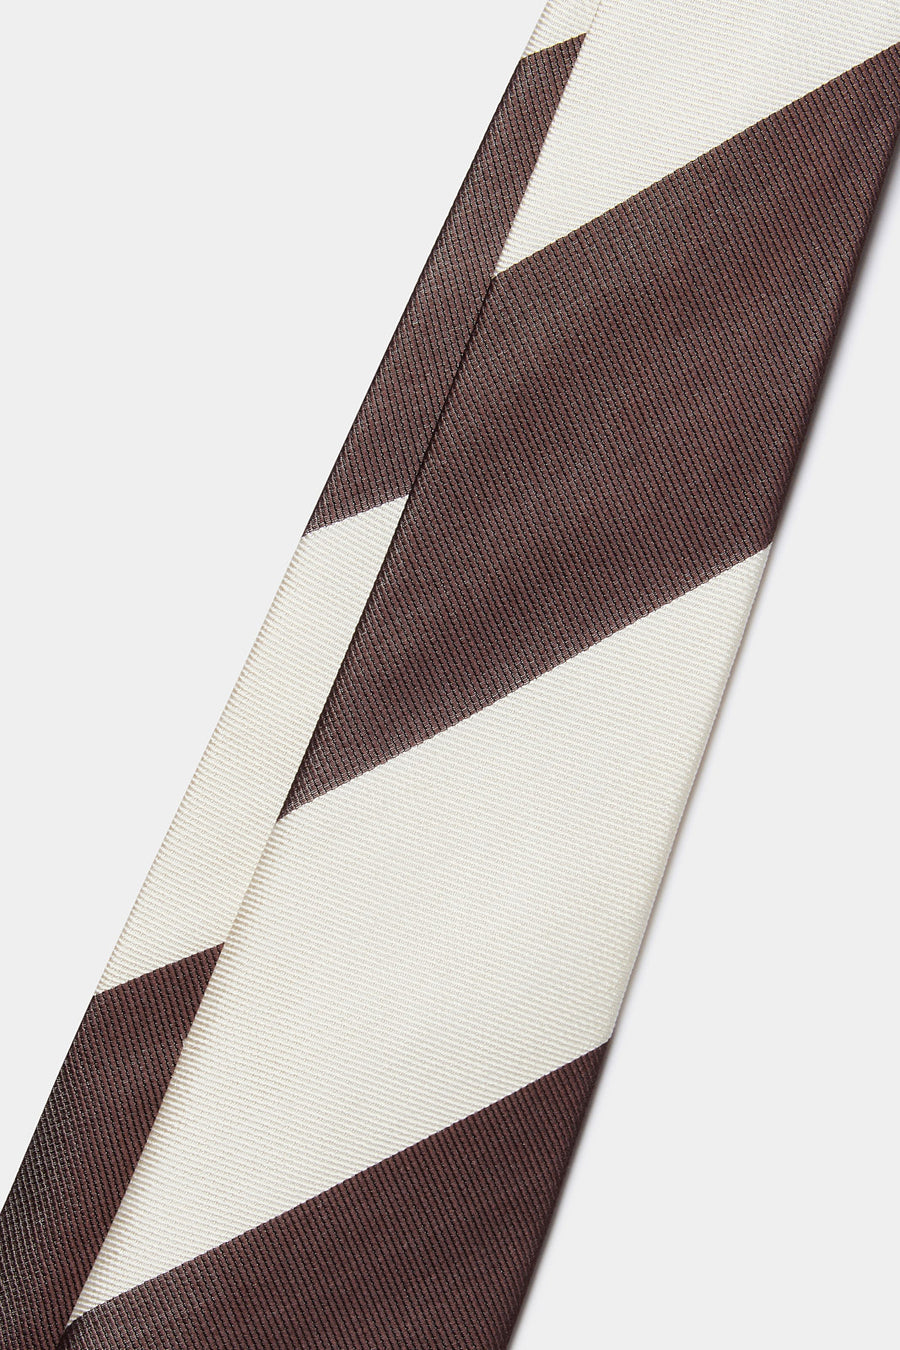 Silk Striped Tie in Carafe